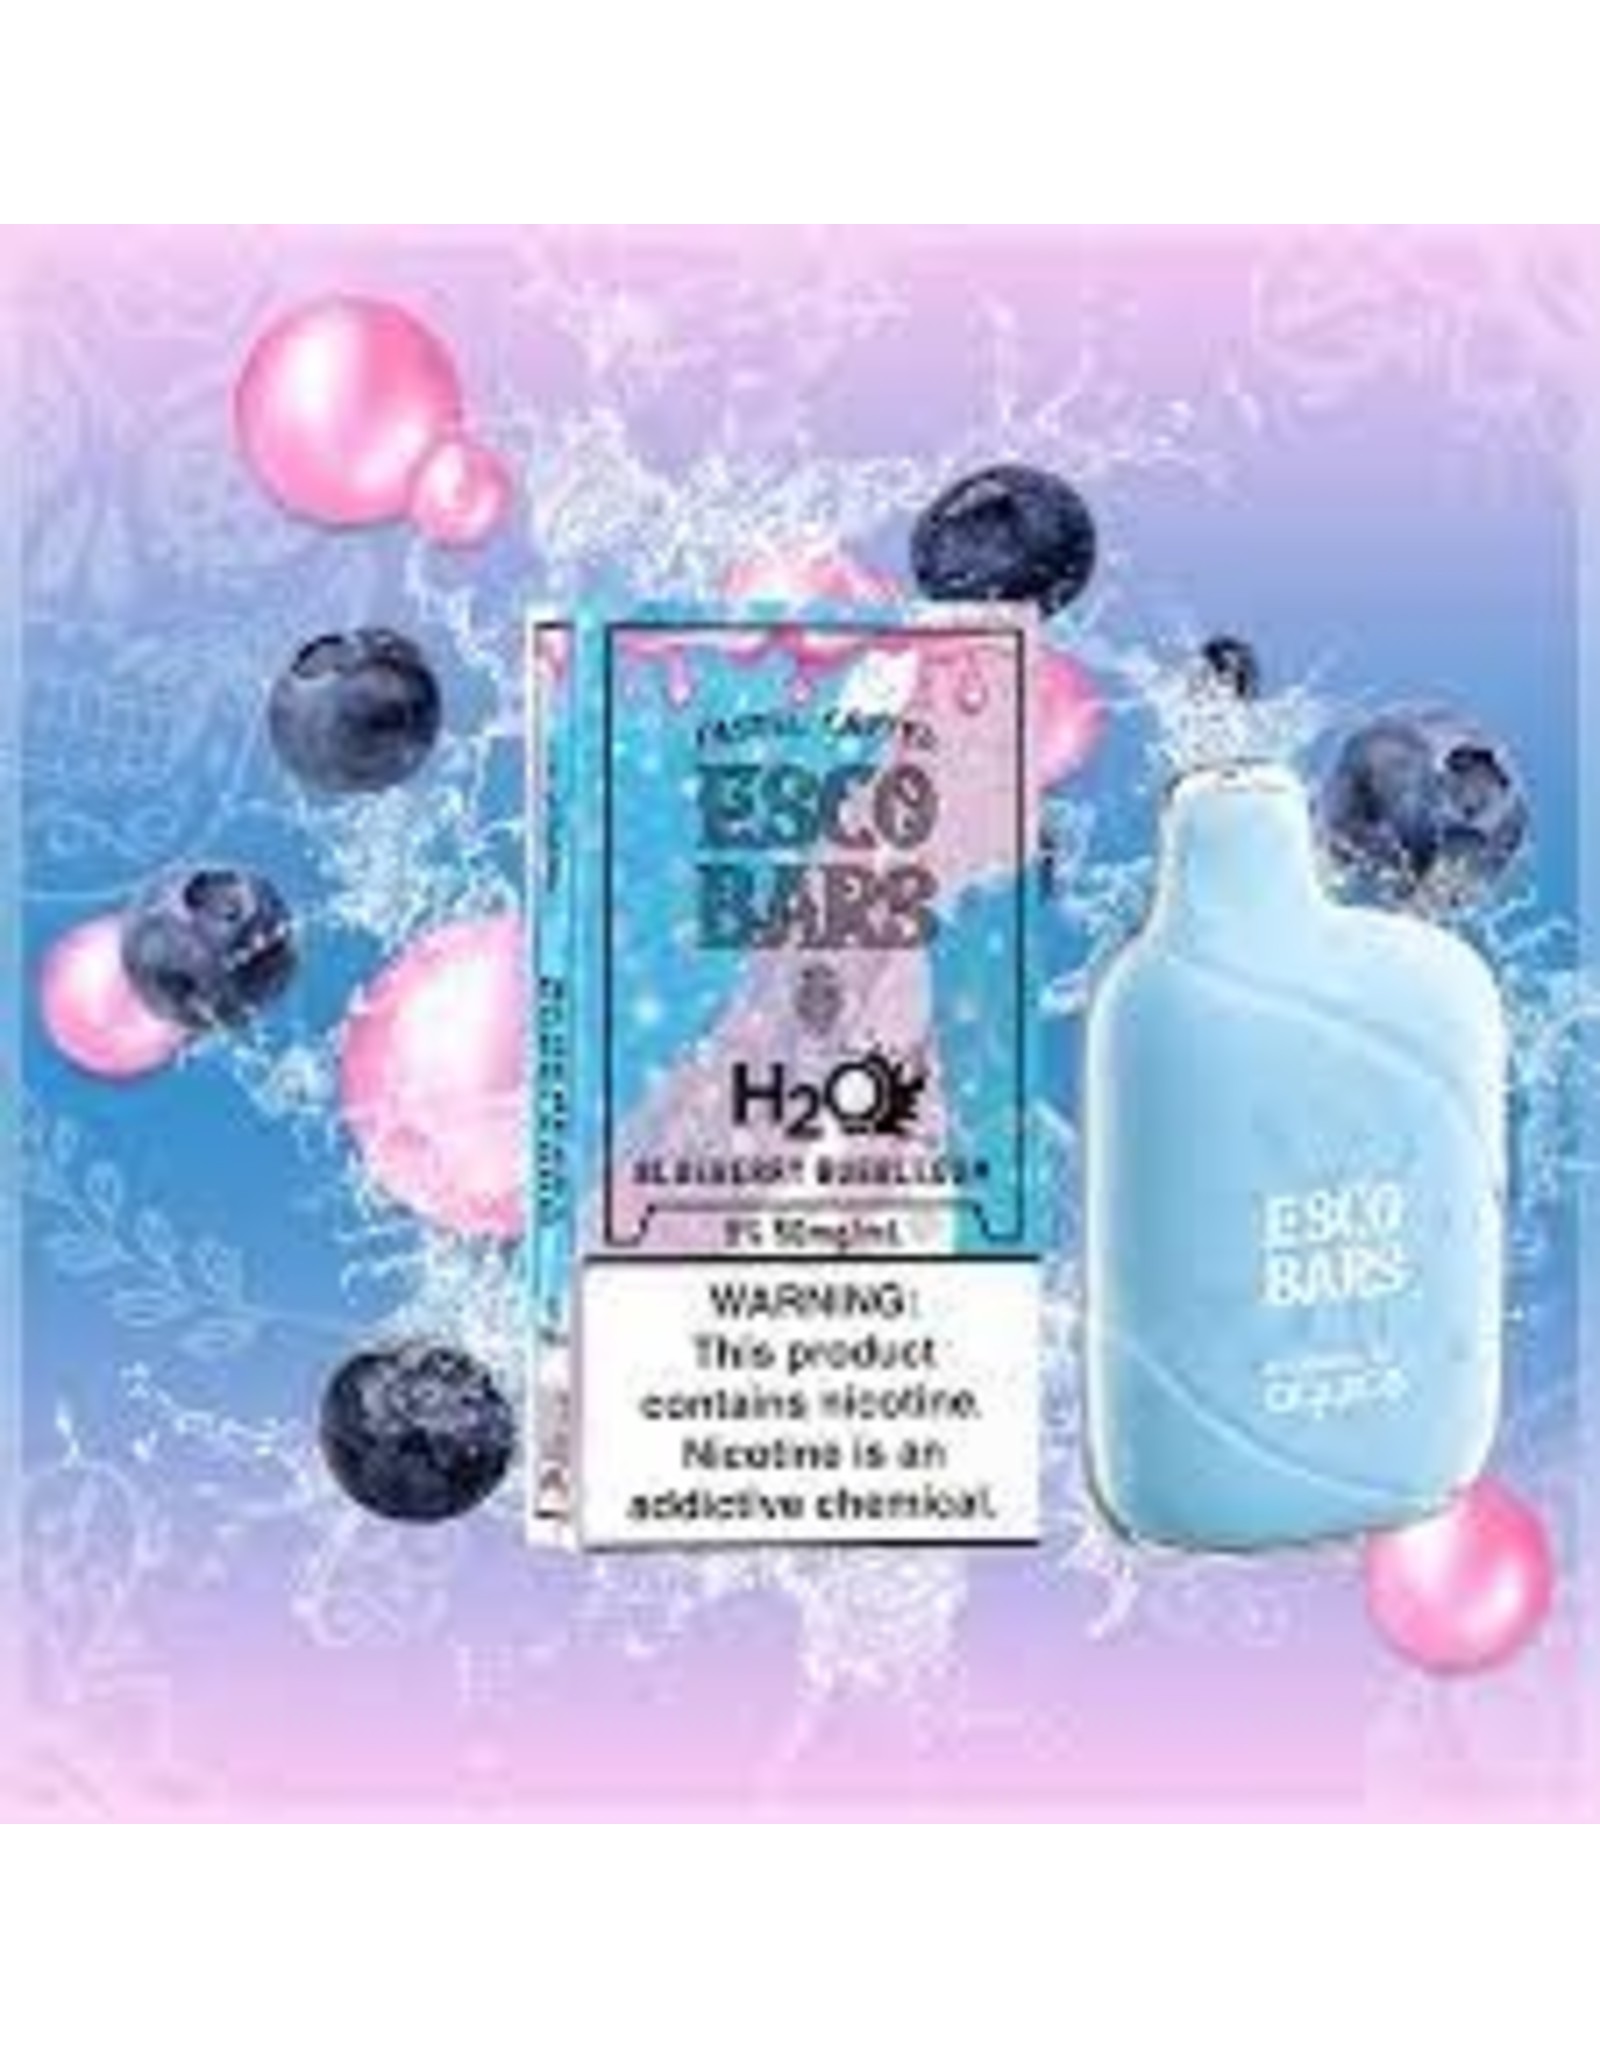 ESCO bars Esco Bar H2O 6000 Puffs Blueberry Bubblegum Box